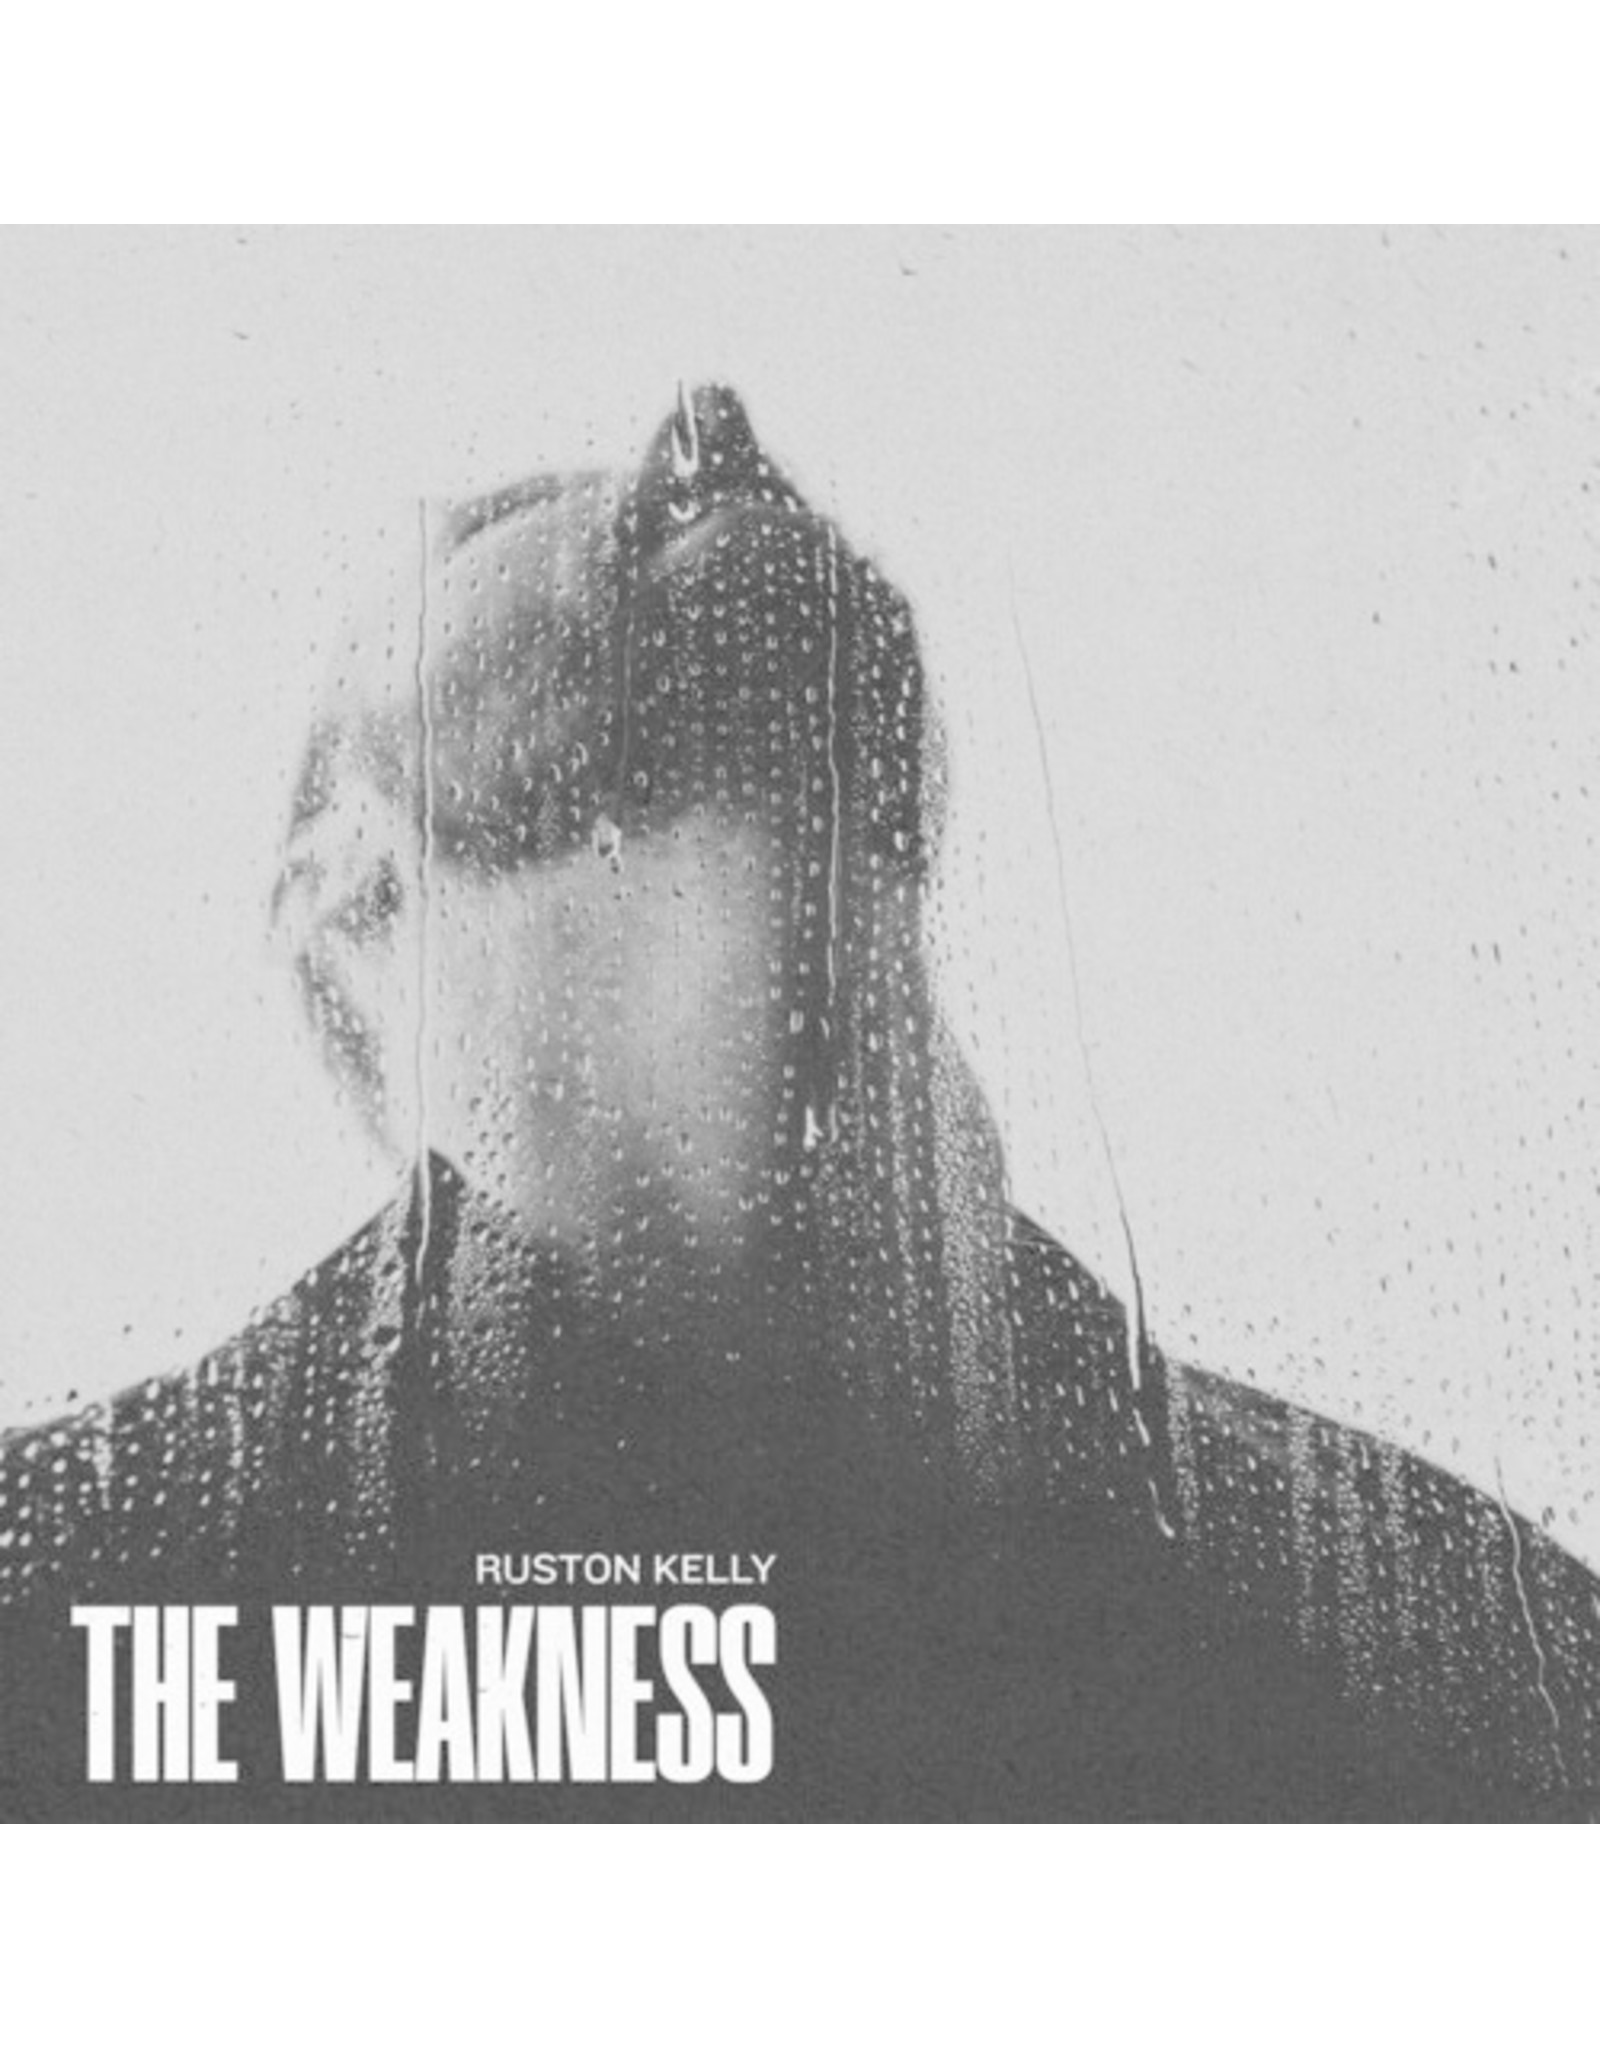 Kelly, Ruston - The Weakness CD